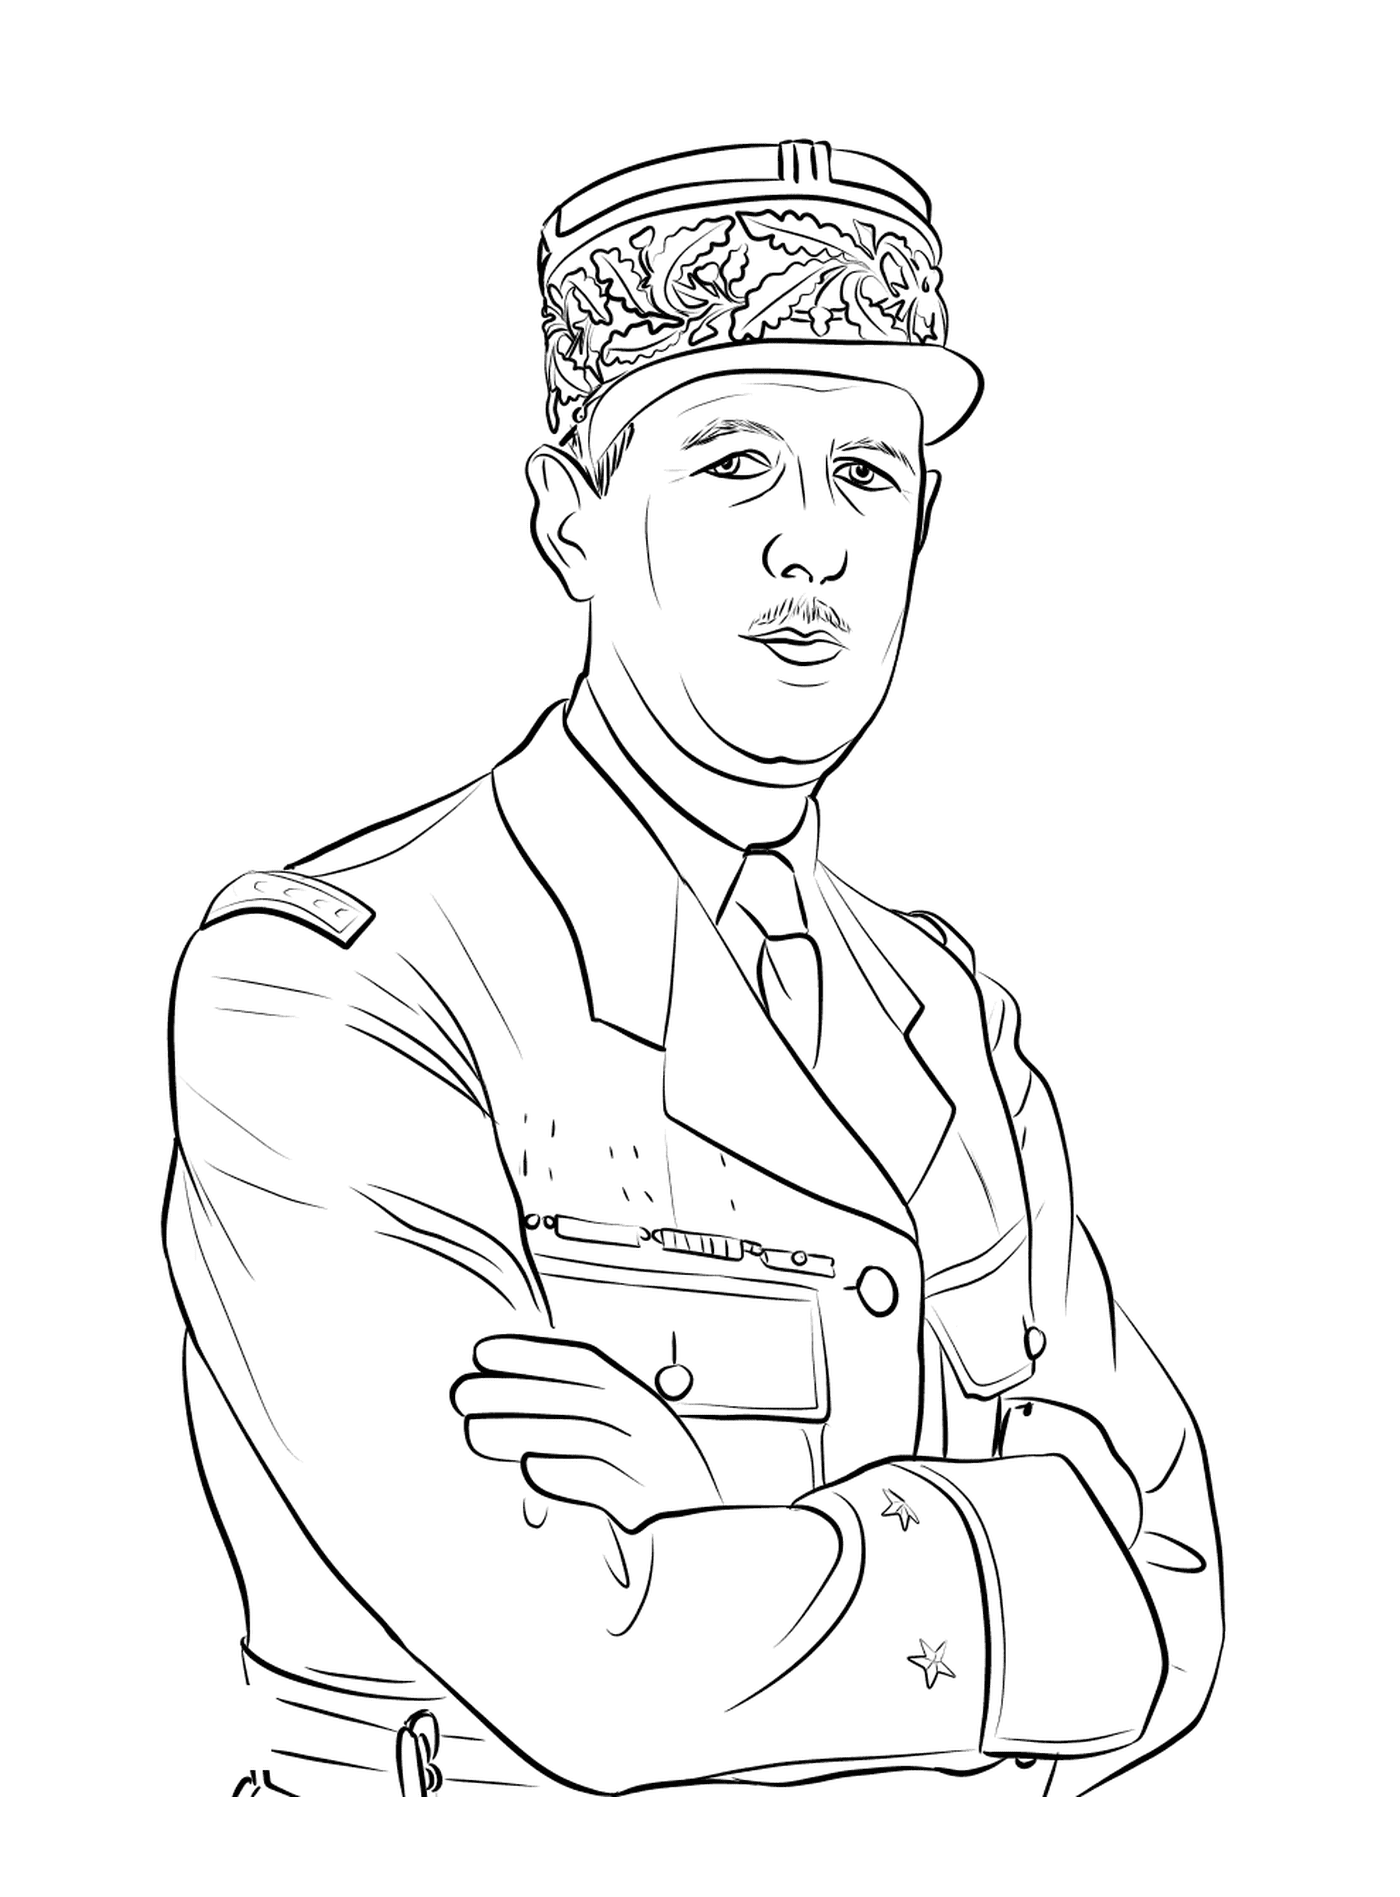  Чарльз де Голль, военный лидер 